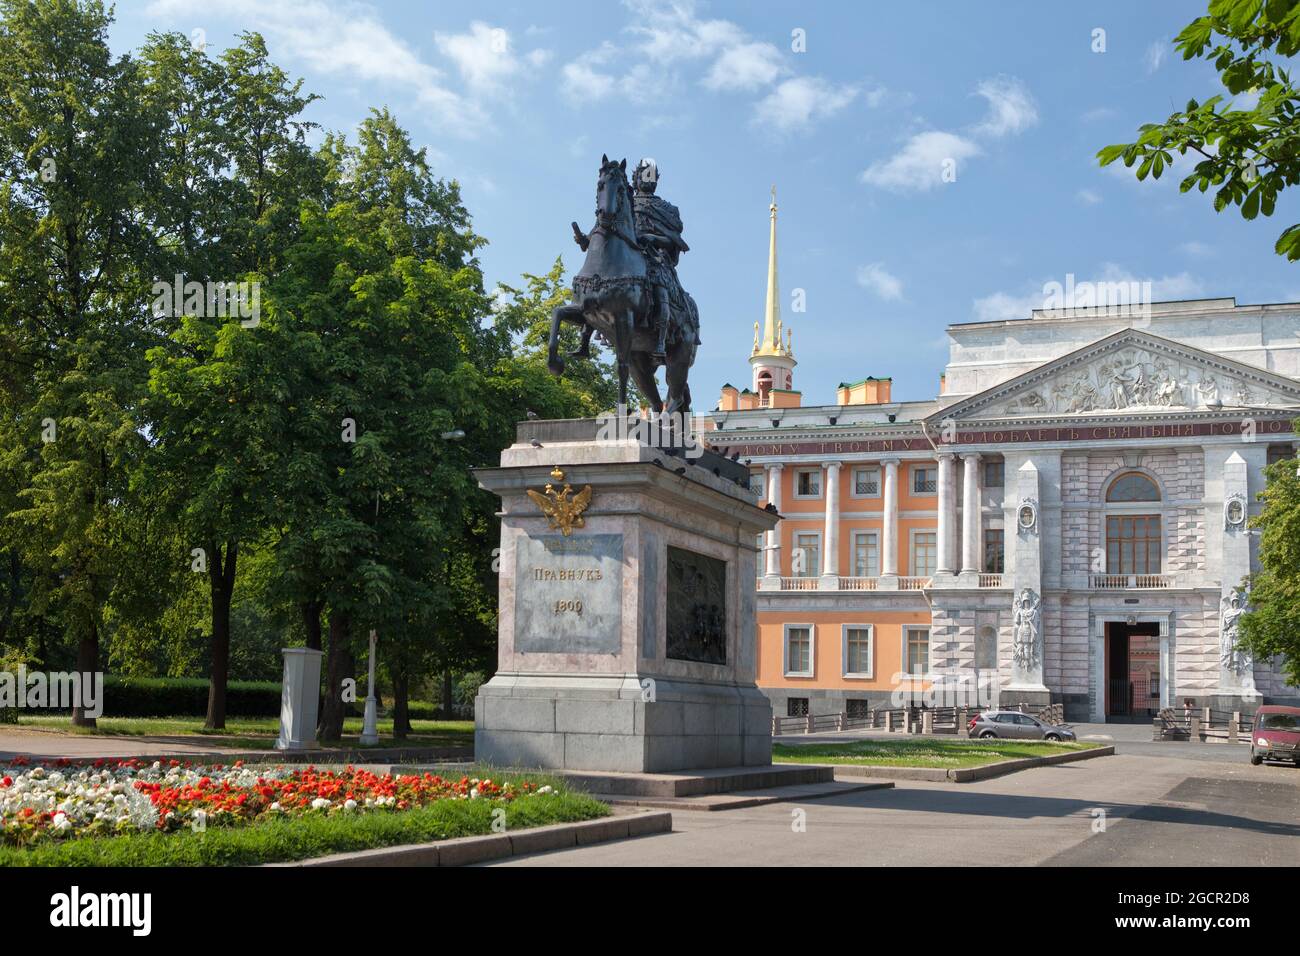 Monumento al zar ruso Pedro el primero, San Petersburgo, Rusia Foto de stock